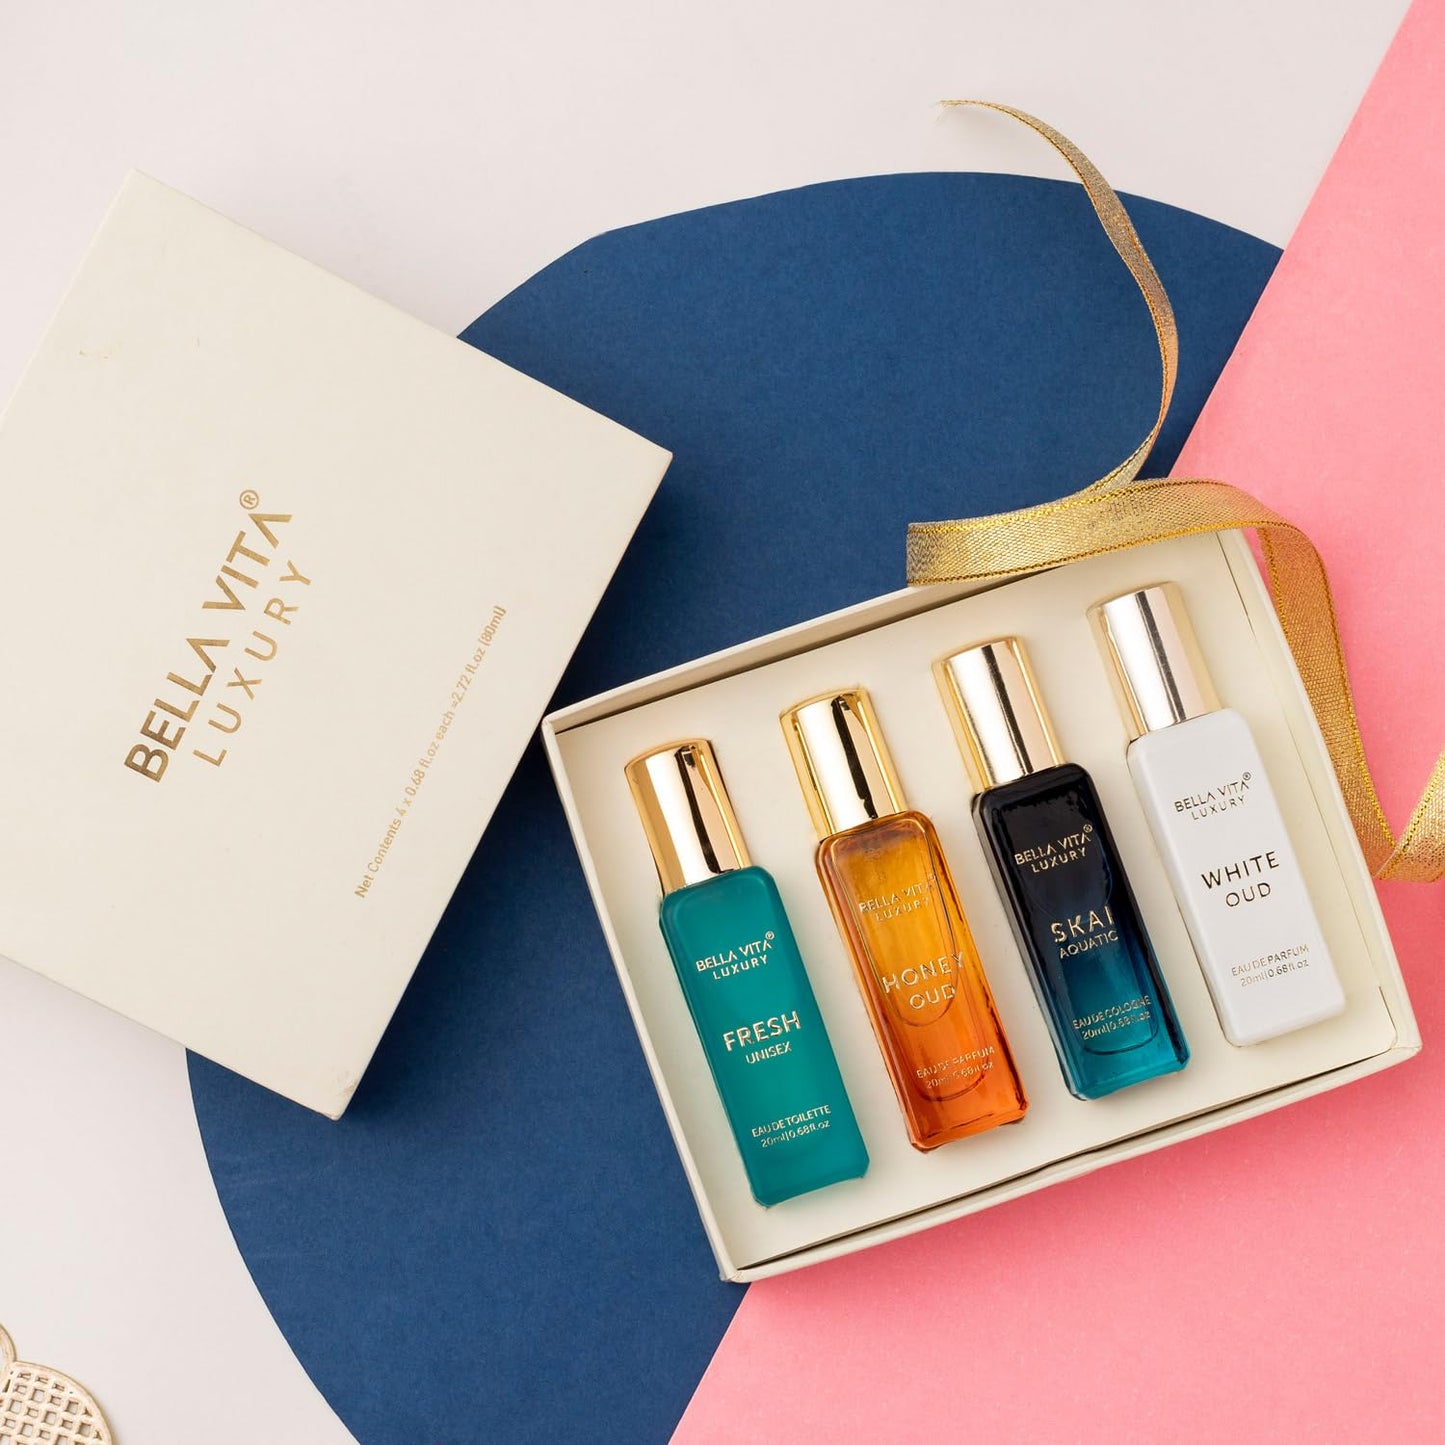 Unisex Luxury Perfume Gift Set 4x20 ML for Men & Women | Long Lasting Fragrance Eau De Parfum | SKAI | FRESH | WHITEOUD | PATCHOULI